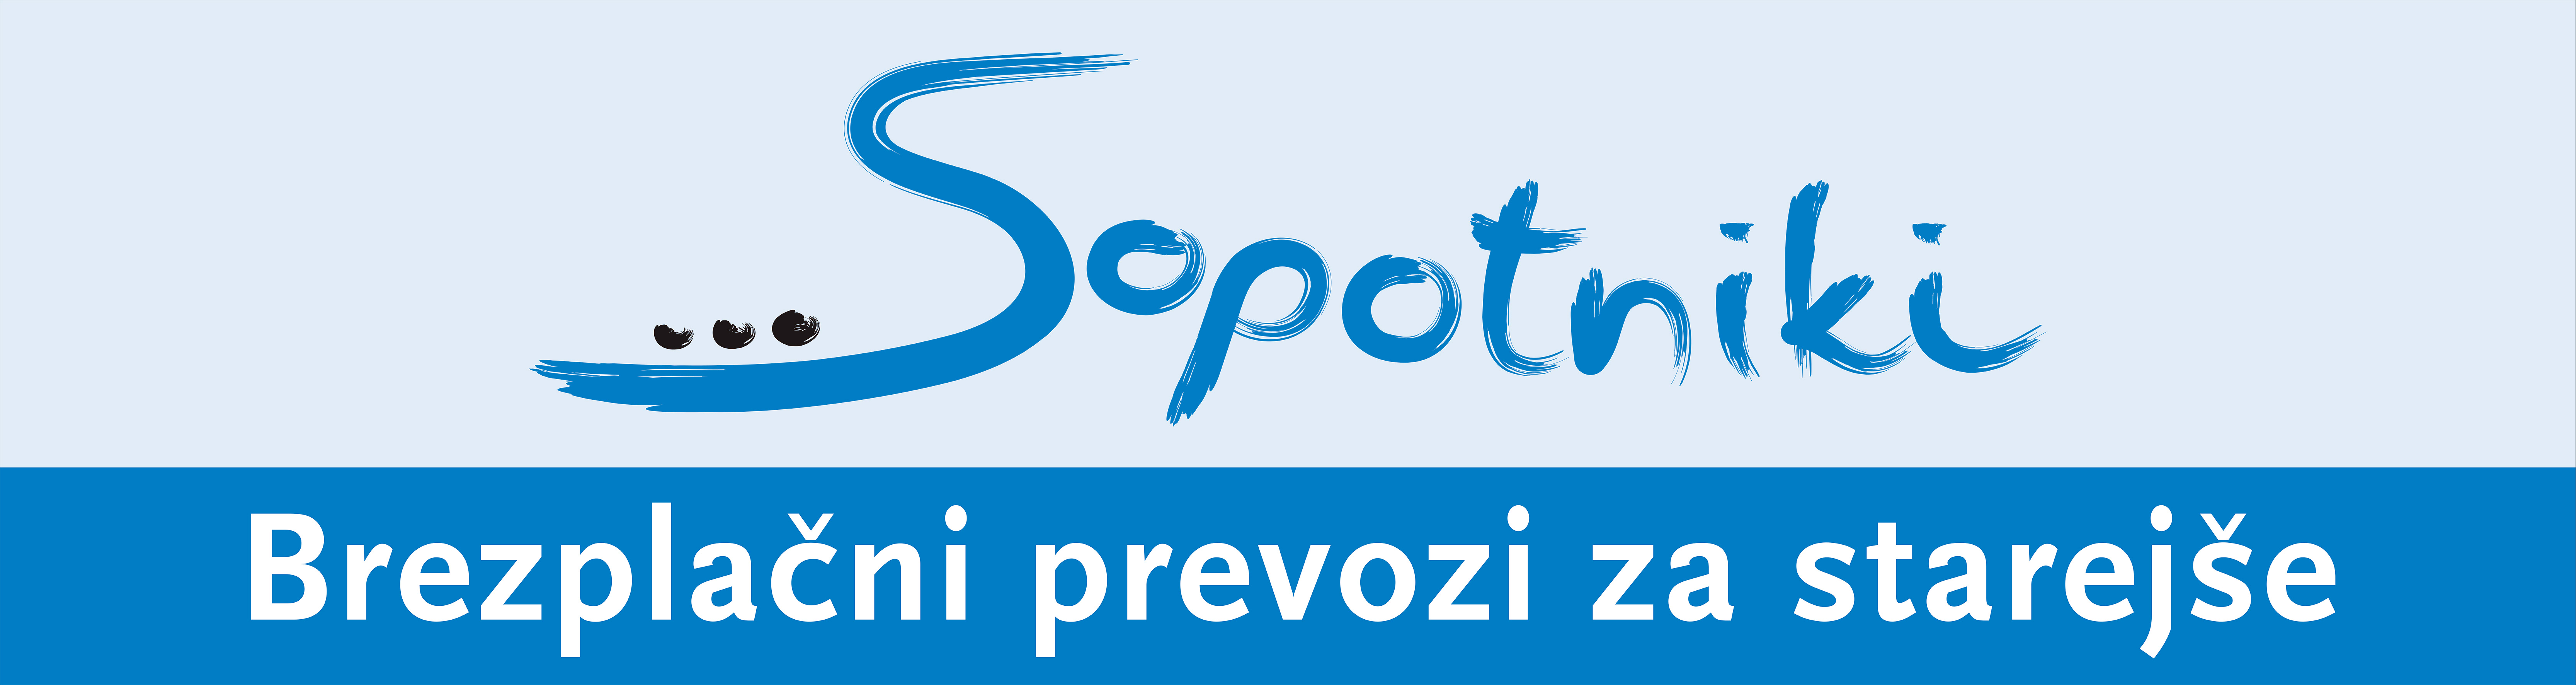 Sopotniki banner.png